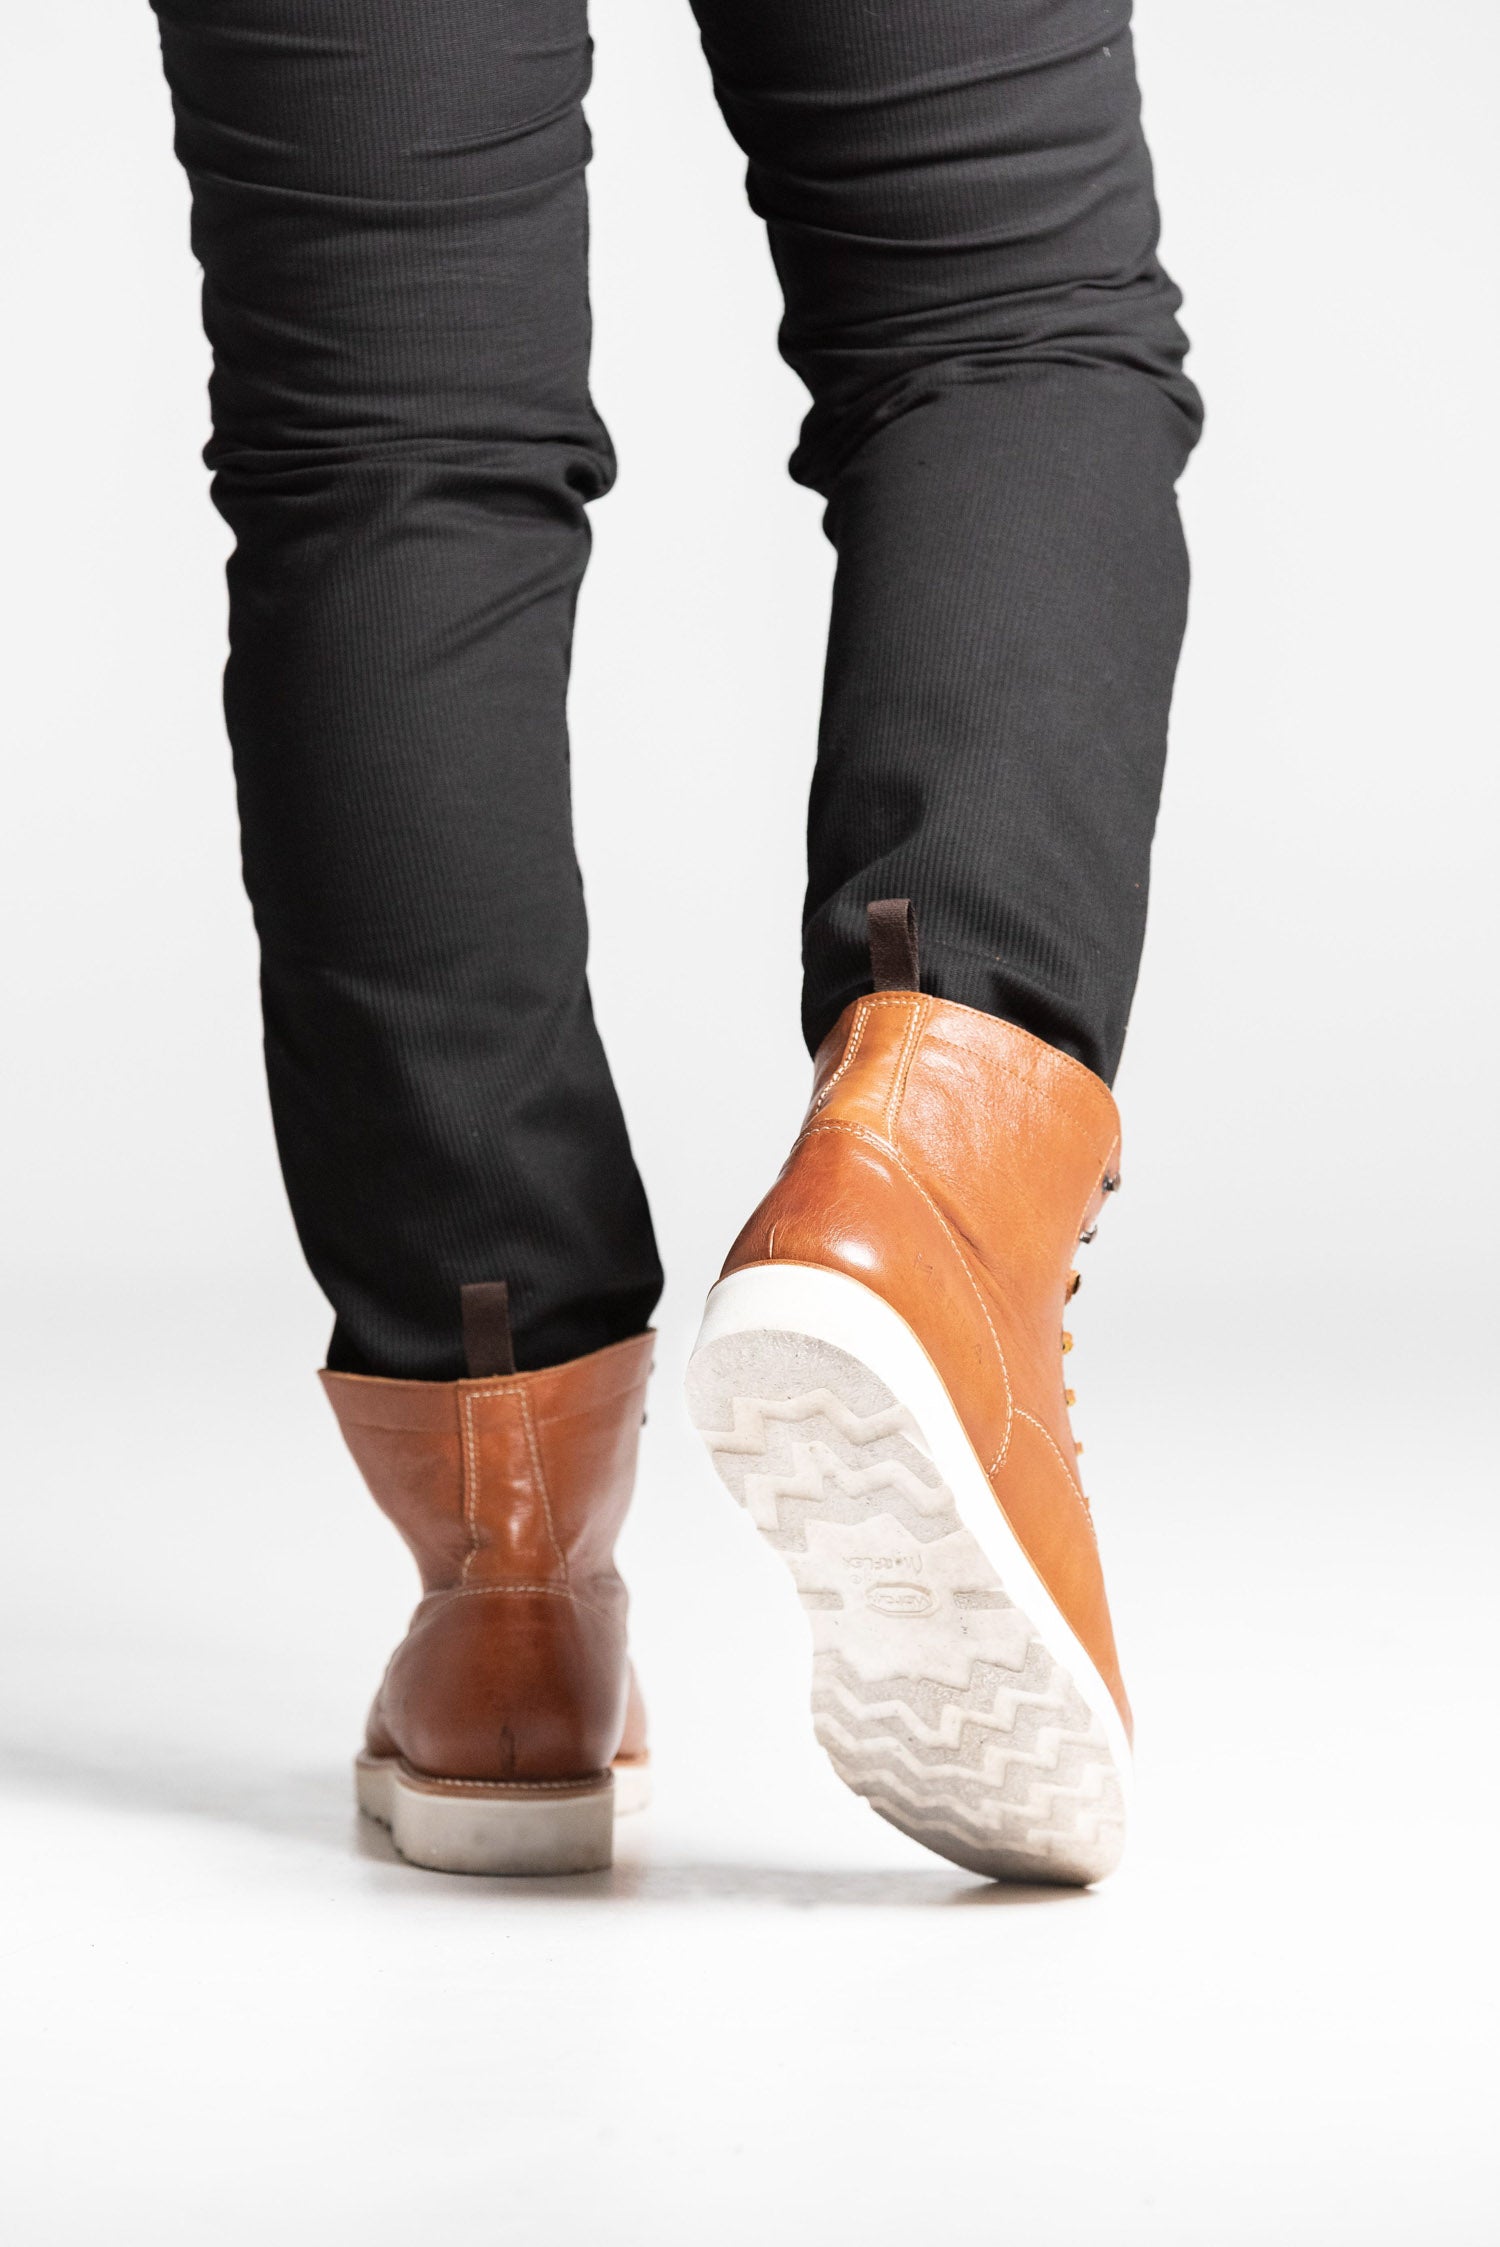 Risco - Mens Tan Leather Boots MERLA MOTO